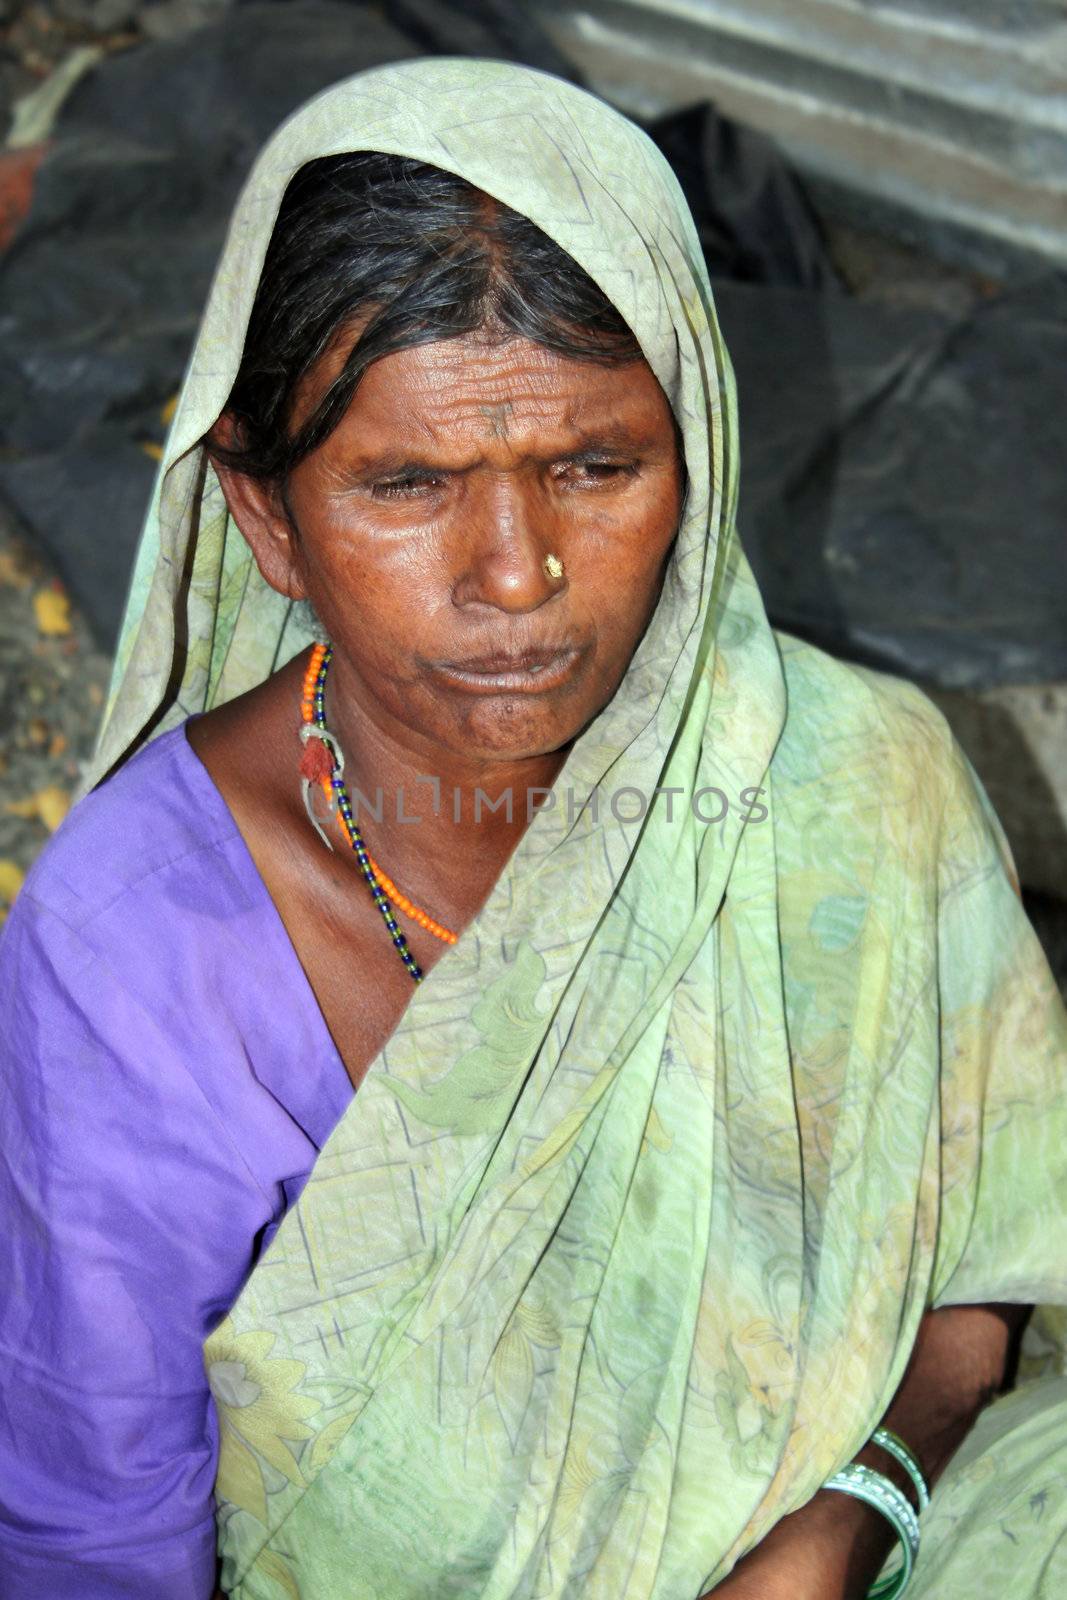 Sad Beggar Woman by thefinalmiracle